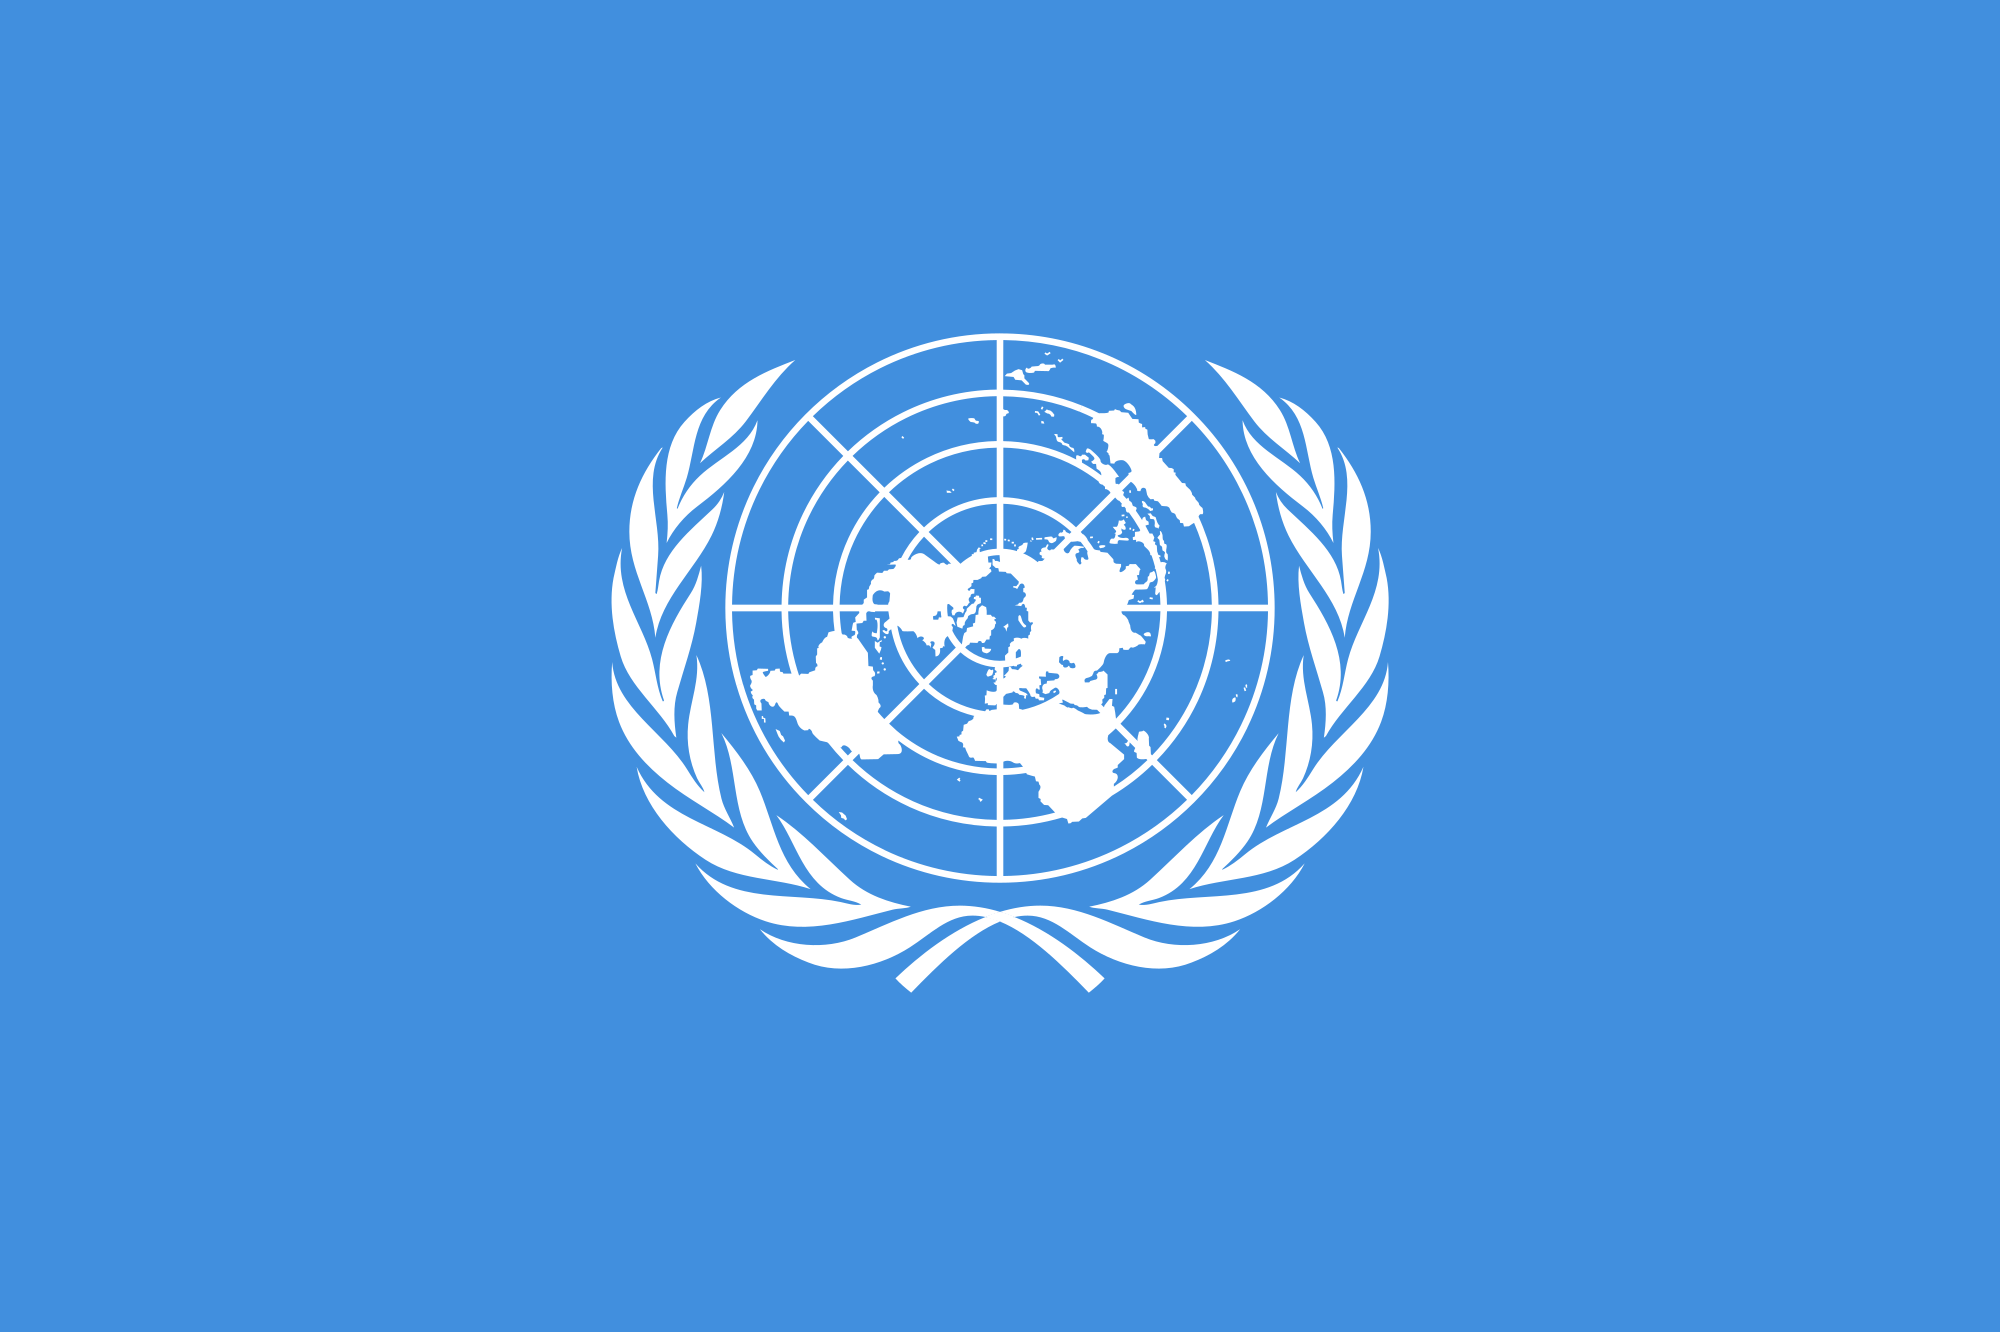 Blue and White Globe Logo - Flag of the United Nations